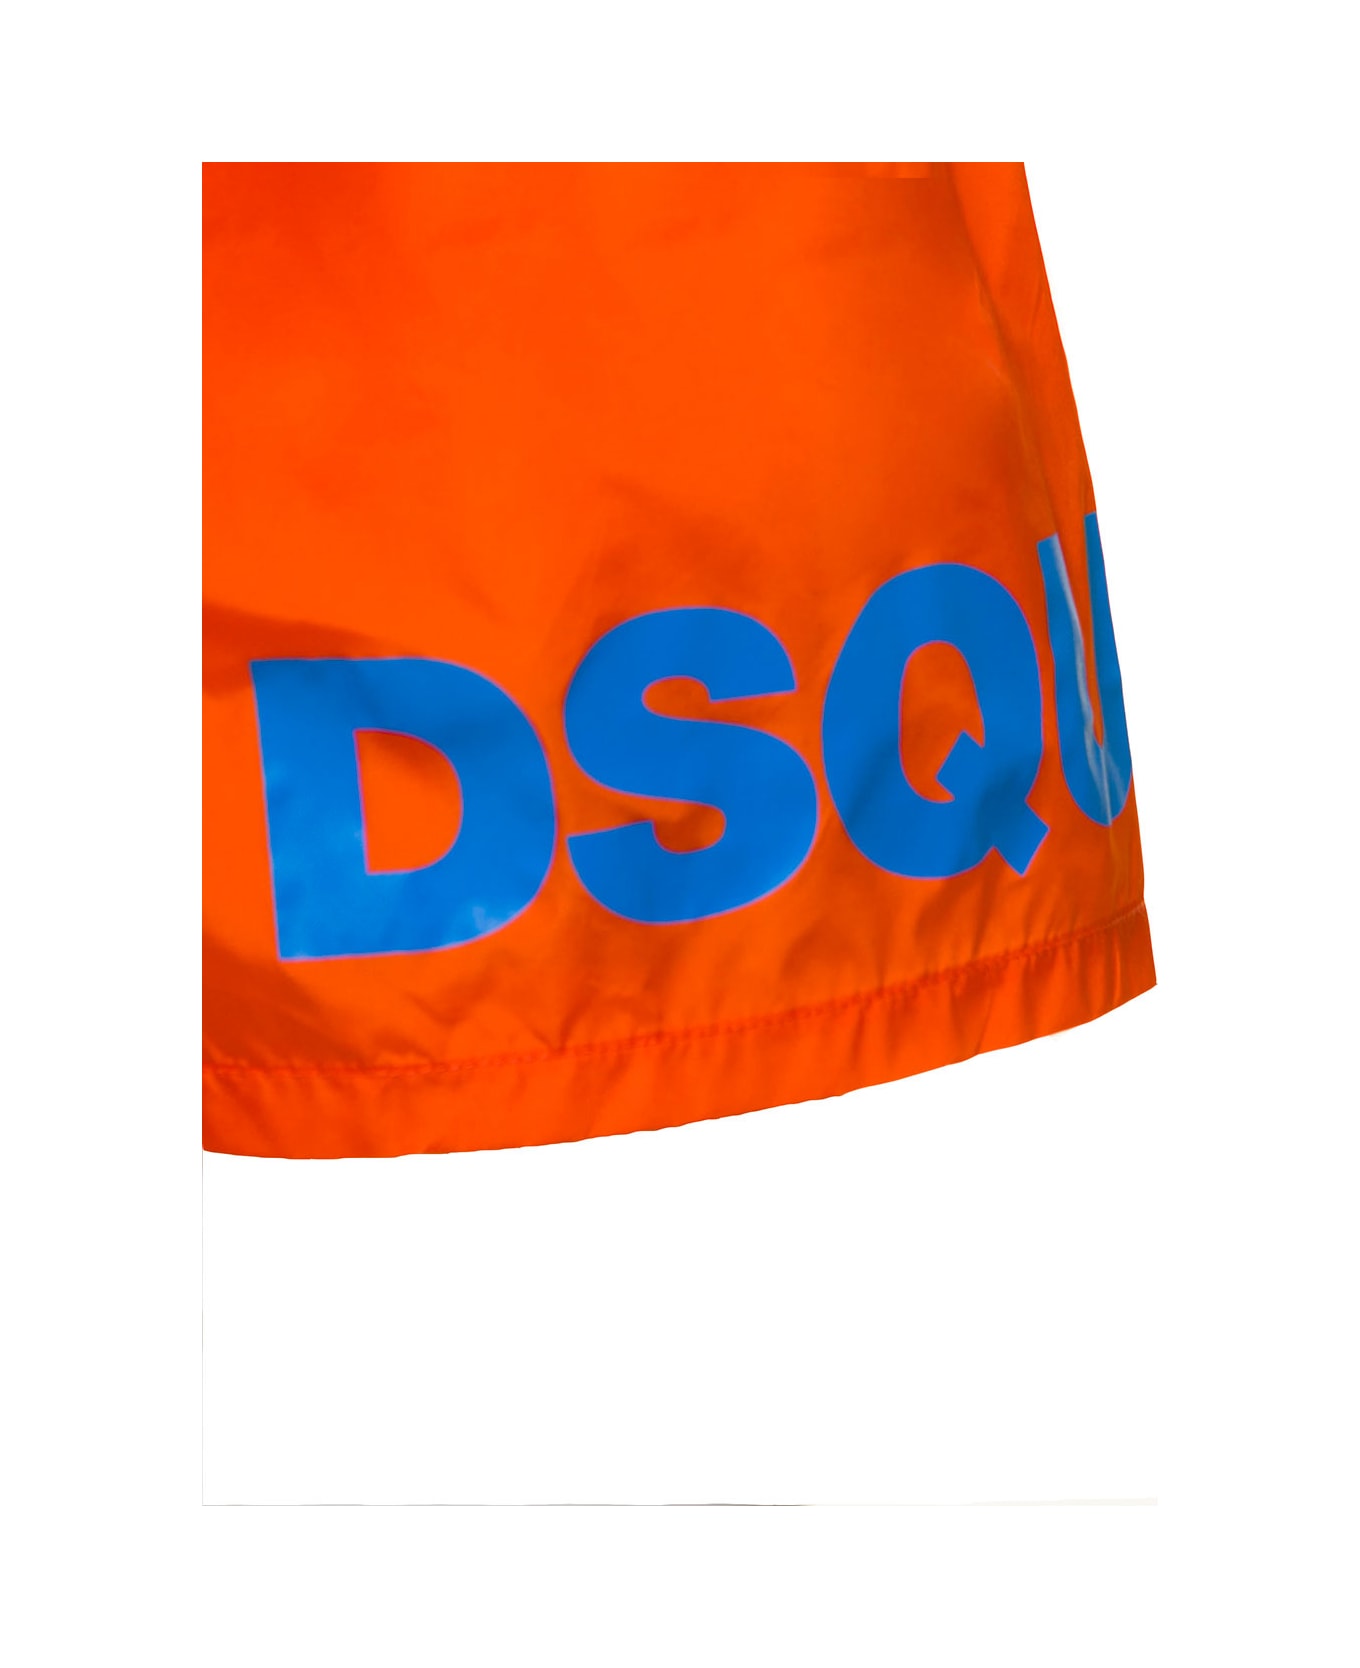 Dsquared2 Boxer Midi - Orange Light